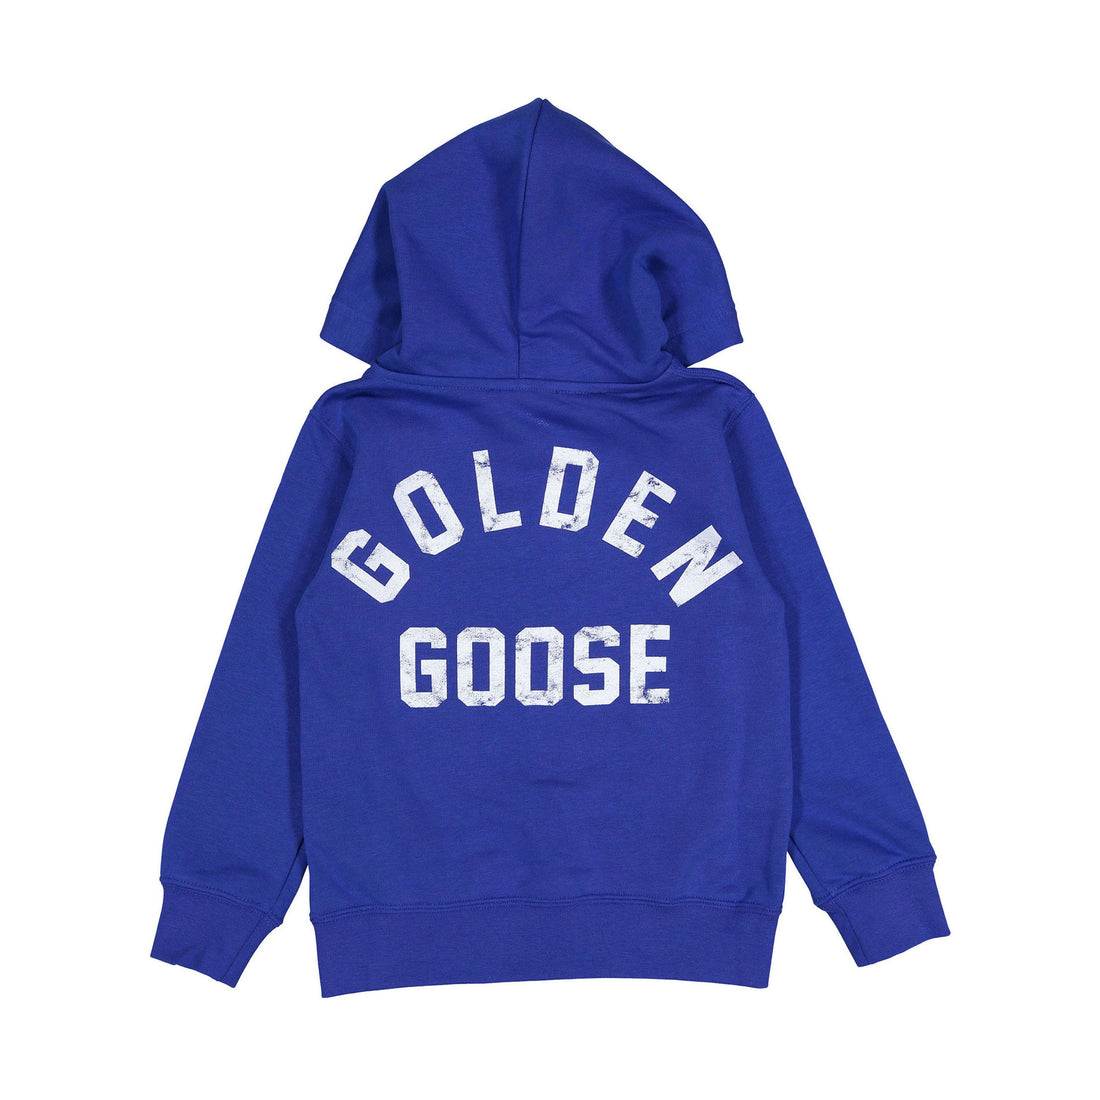 Golden Goose Mazarine Blue Zipped Sweatshirt Hoodie